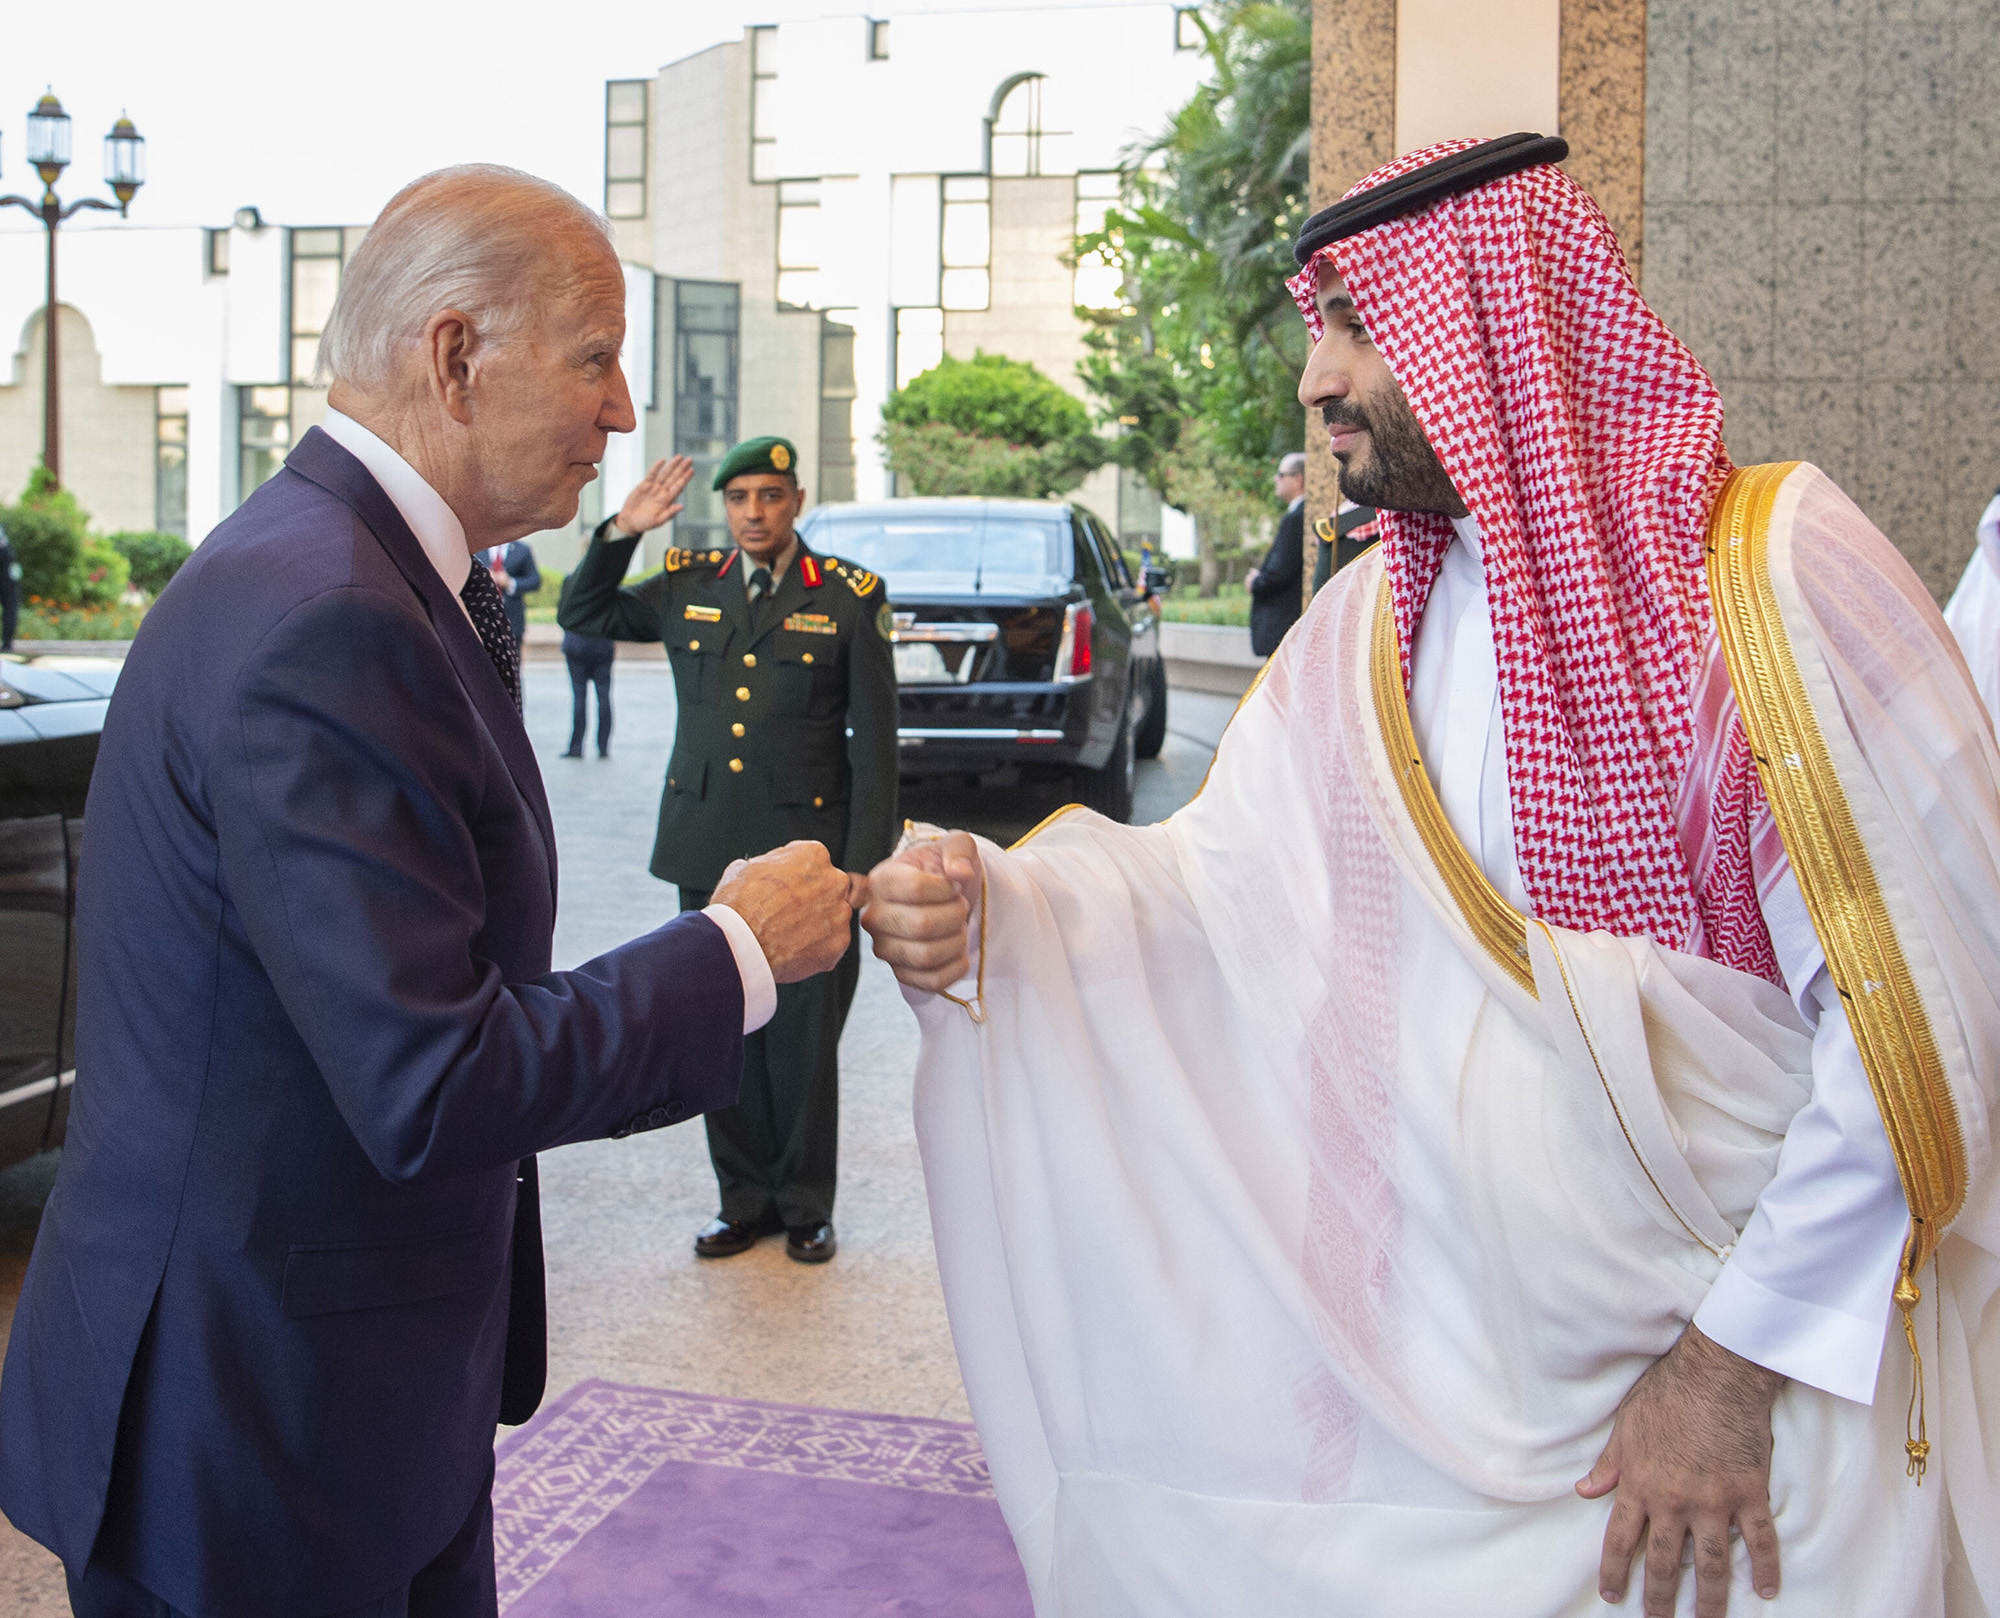 US President Joe Biden, left, being welcomed by Saudi Arabian Crown Prince Mohammed bin Salman at Alsalam Royal Palace in Jeddah, Saudi Arabia, on July 15.